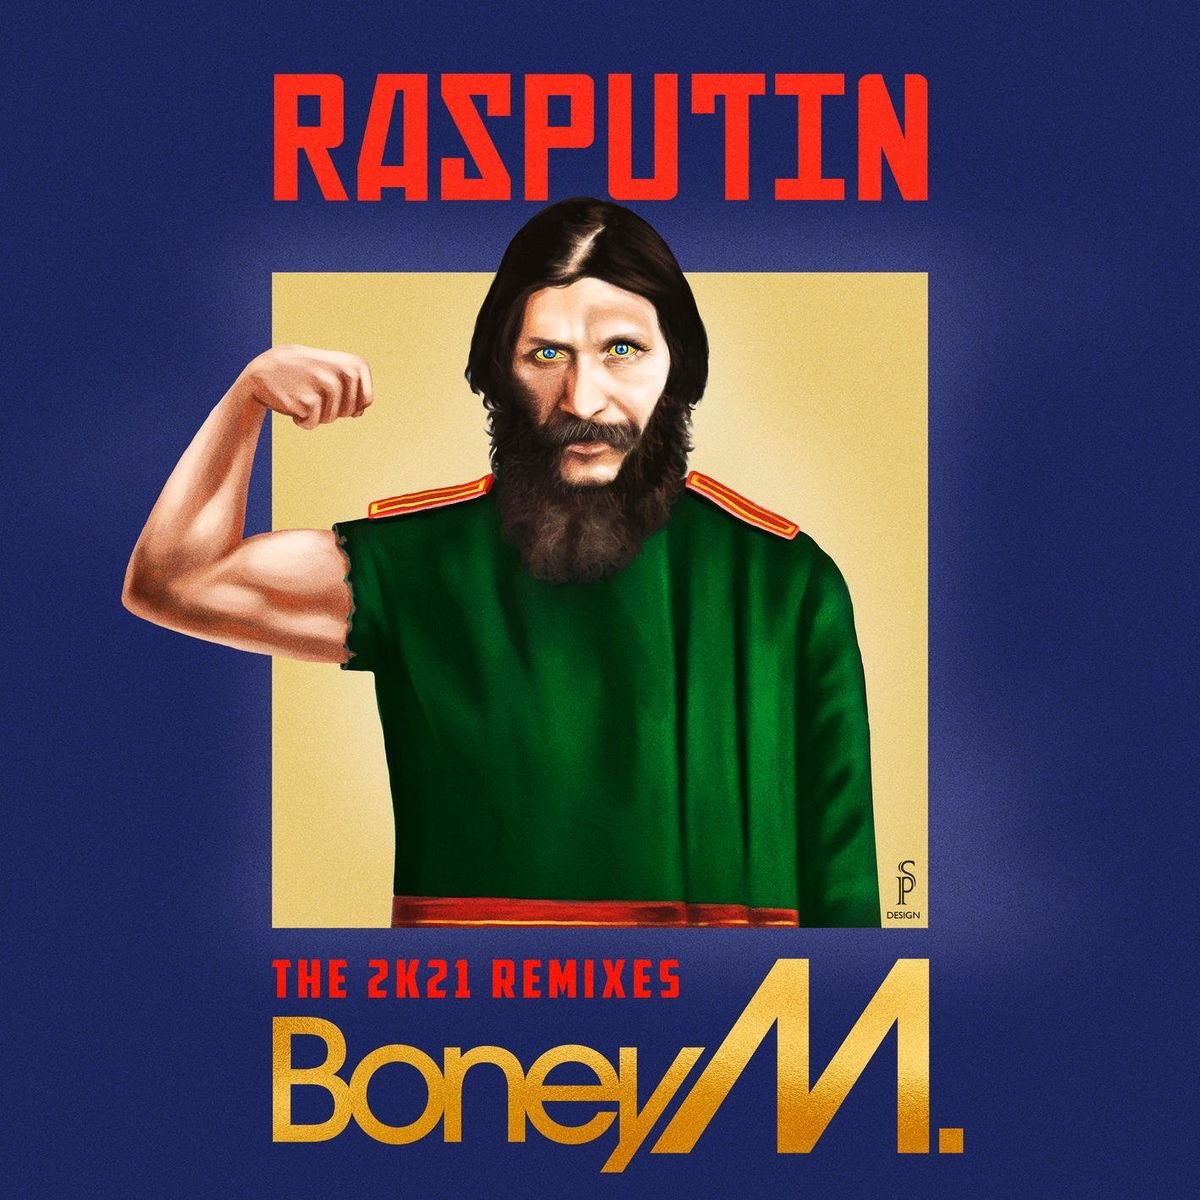 Boney M.-Rasputin – Lover Of The Russian Queen-16BIT-WEB-FLAC-2021-TM